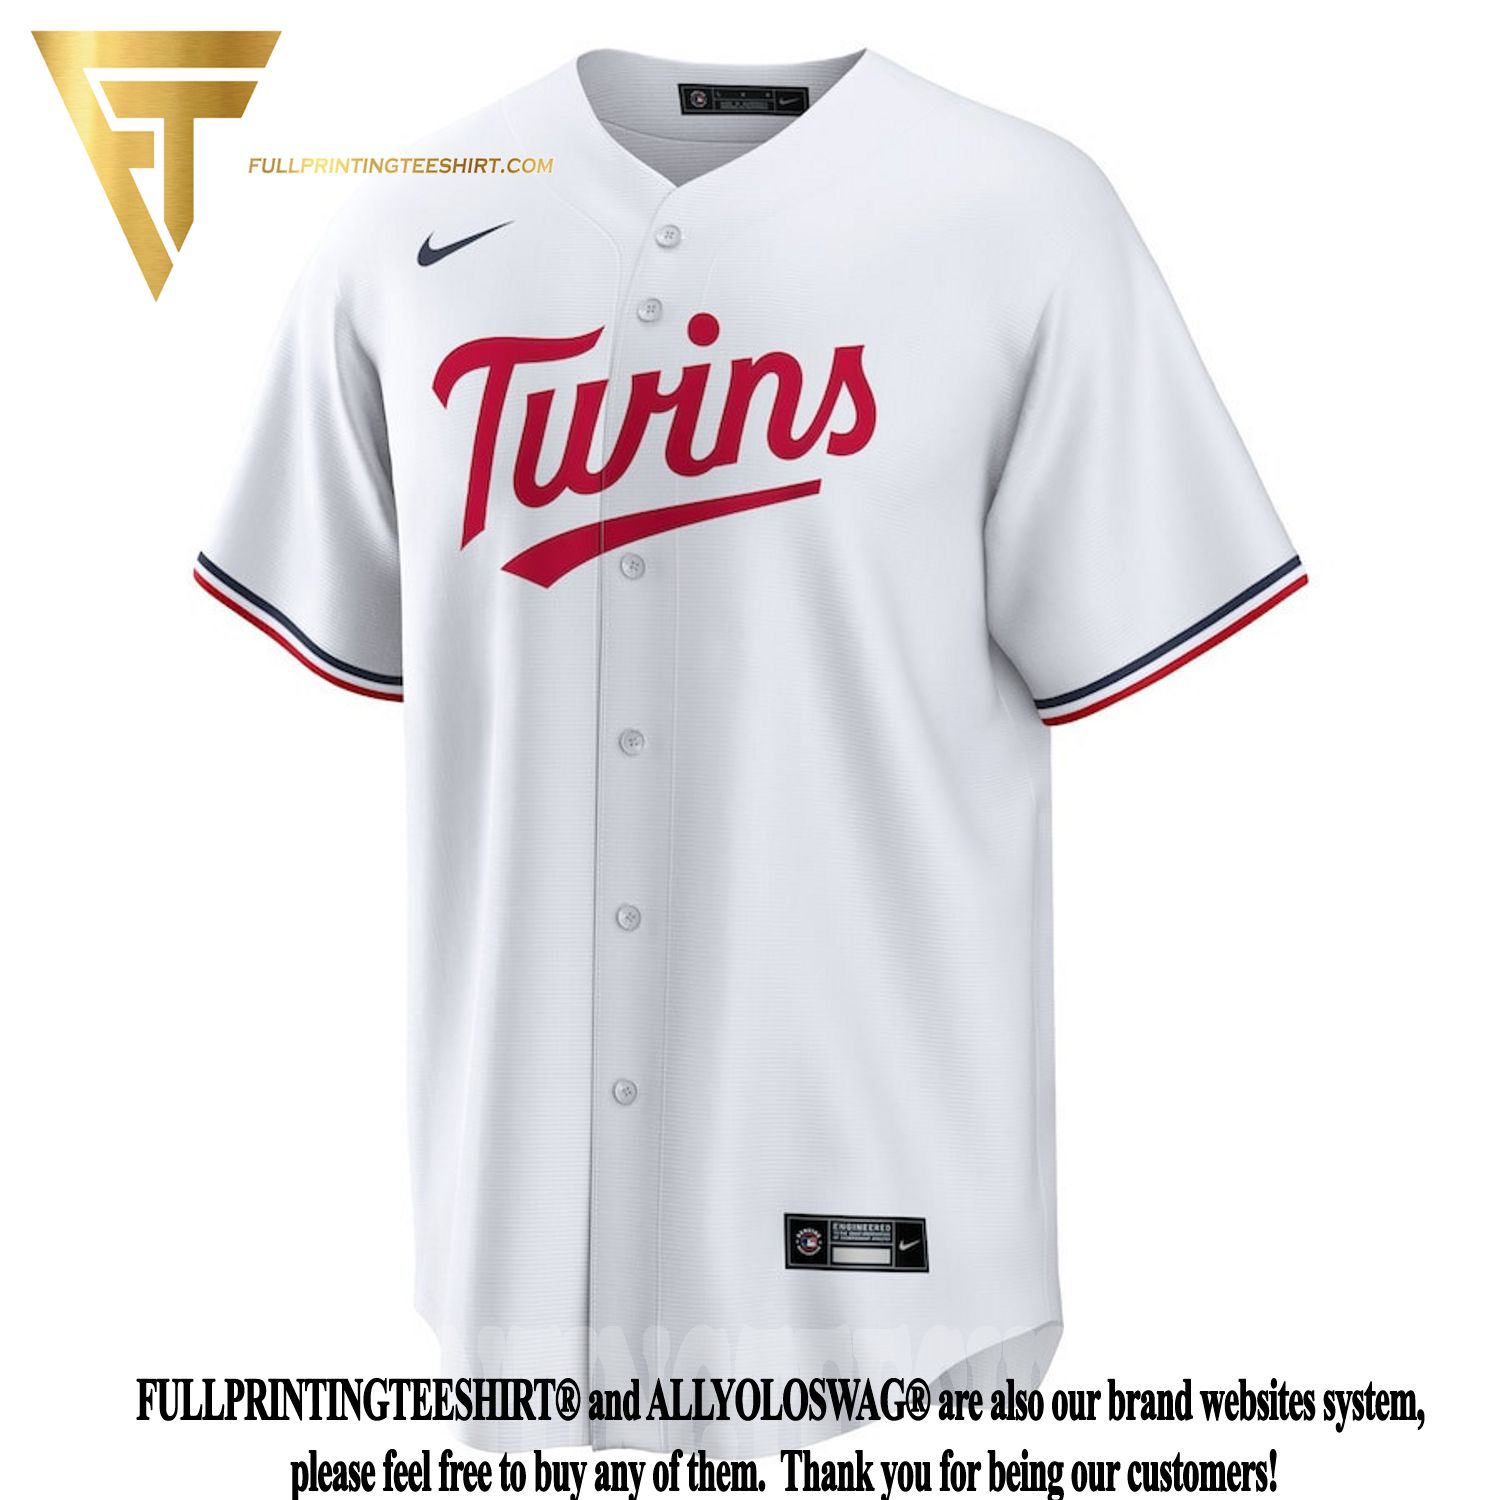 Top-selling Item] Carlos Correa 4 Minnesota Twins Team Logo Home Men - White